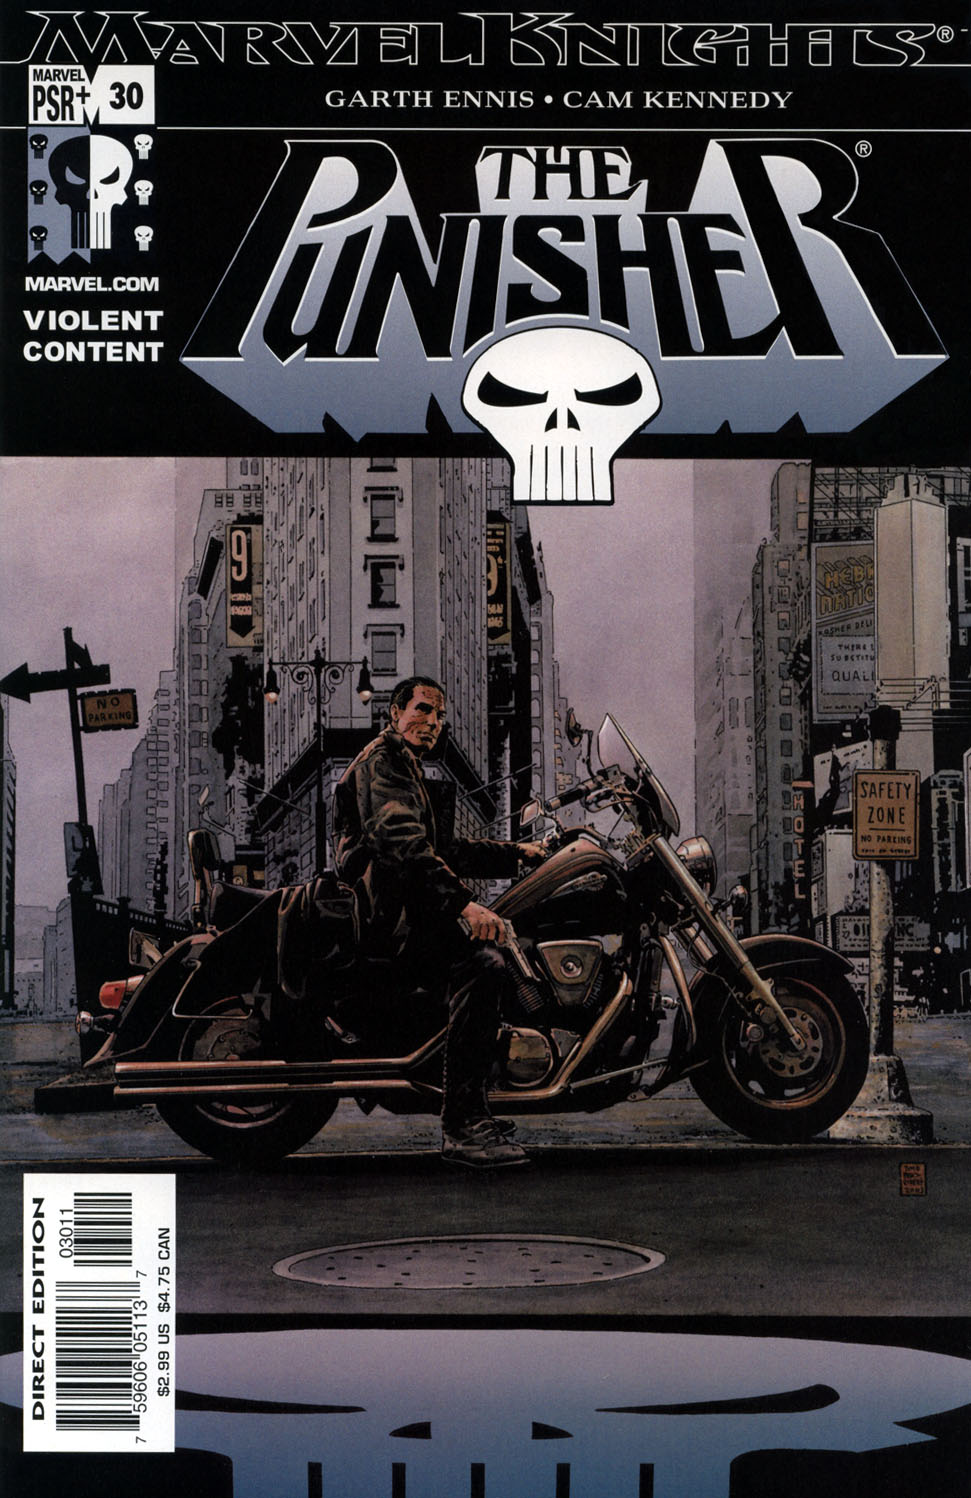 The Punisher (2001) Issue #30 - Streets of Laredo #03 #30 - English 1